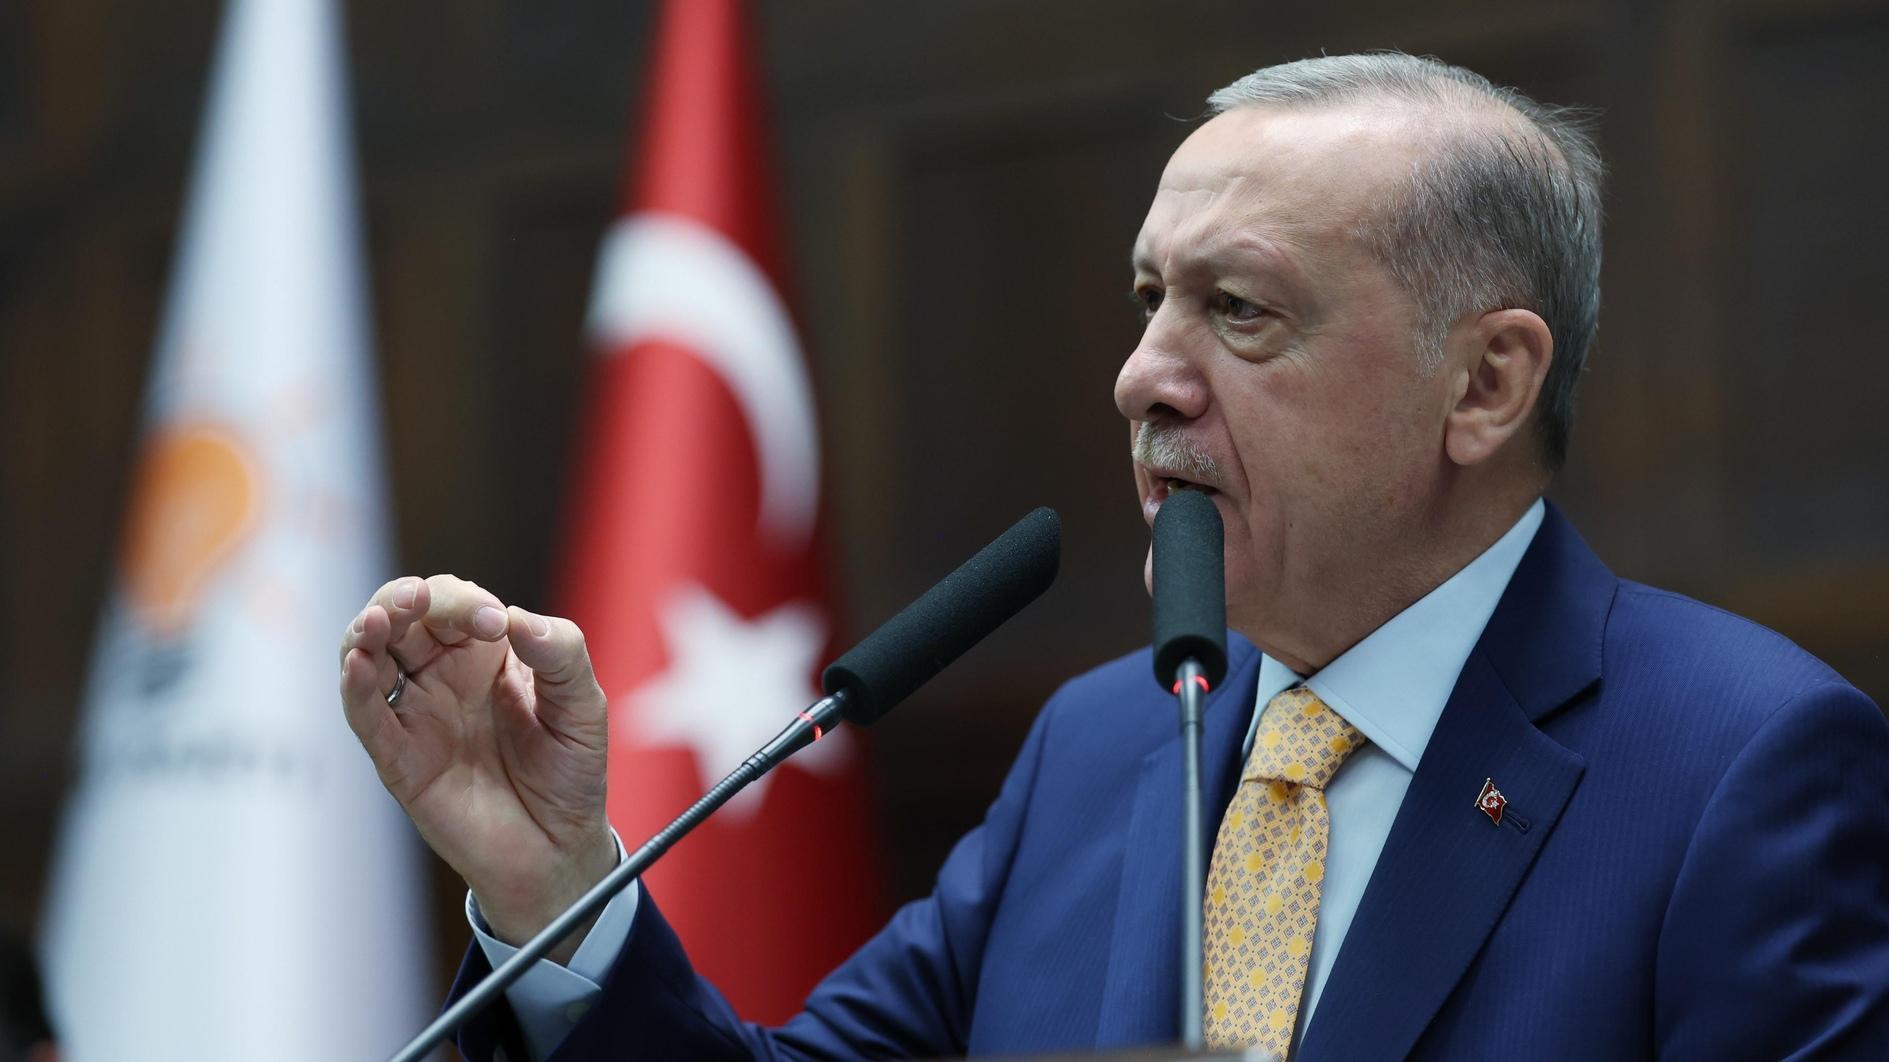 Erdoğan reaffirms continued support for Palestine